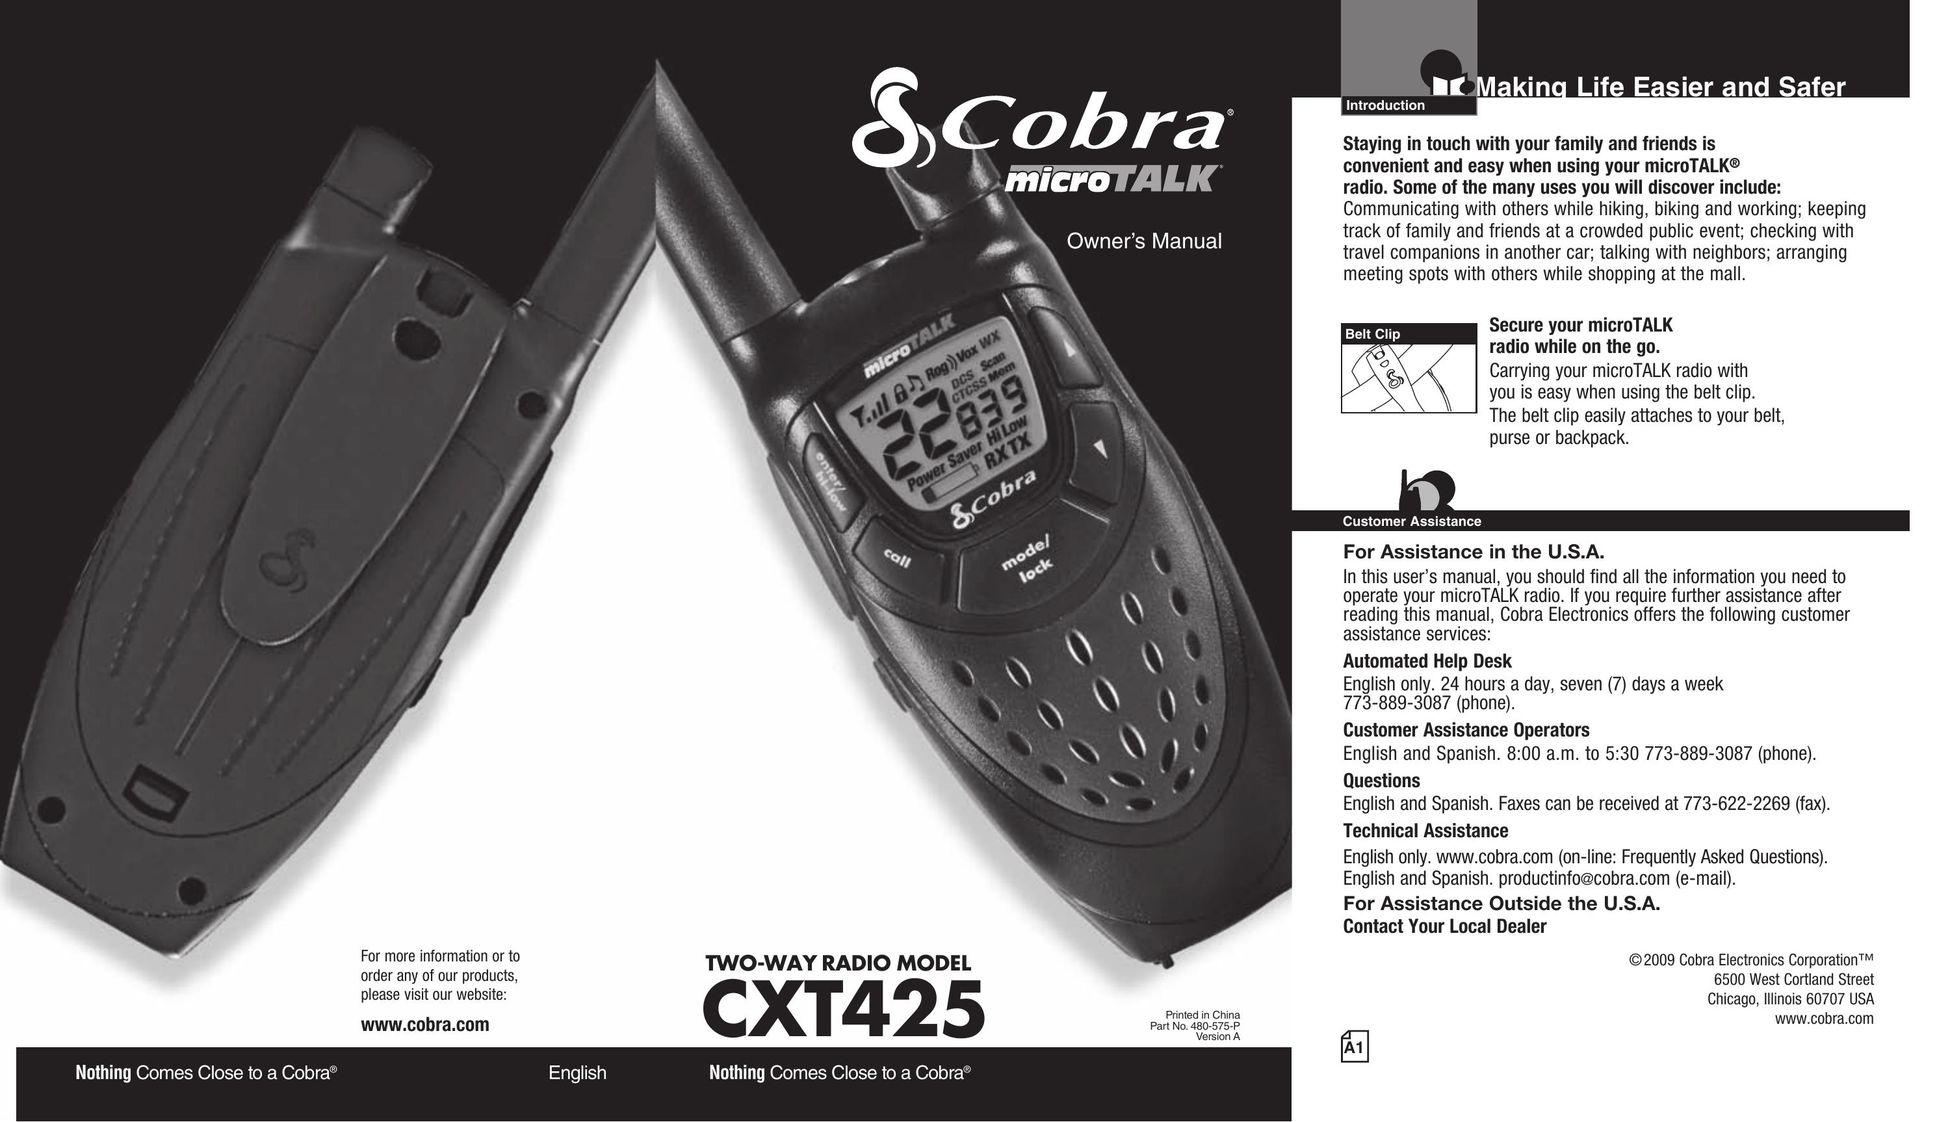 Cobra Electronics CXT425 Two-Way Radio User Manual